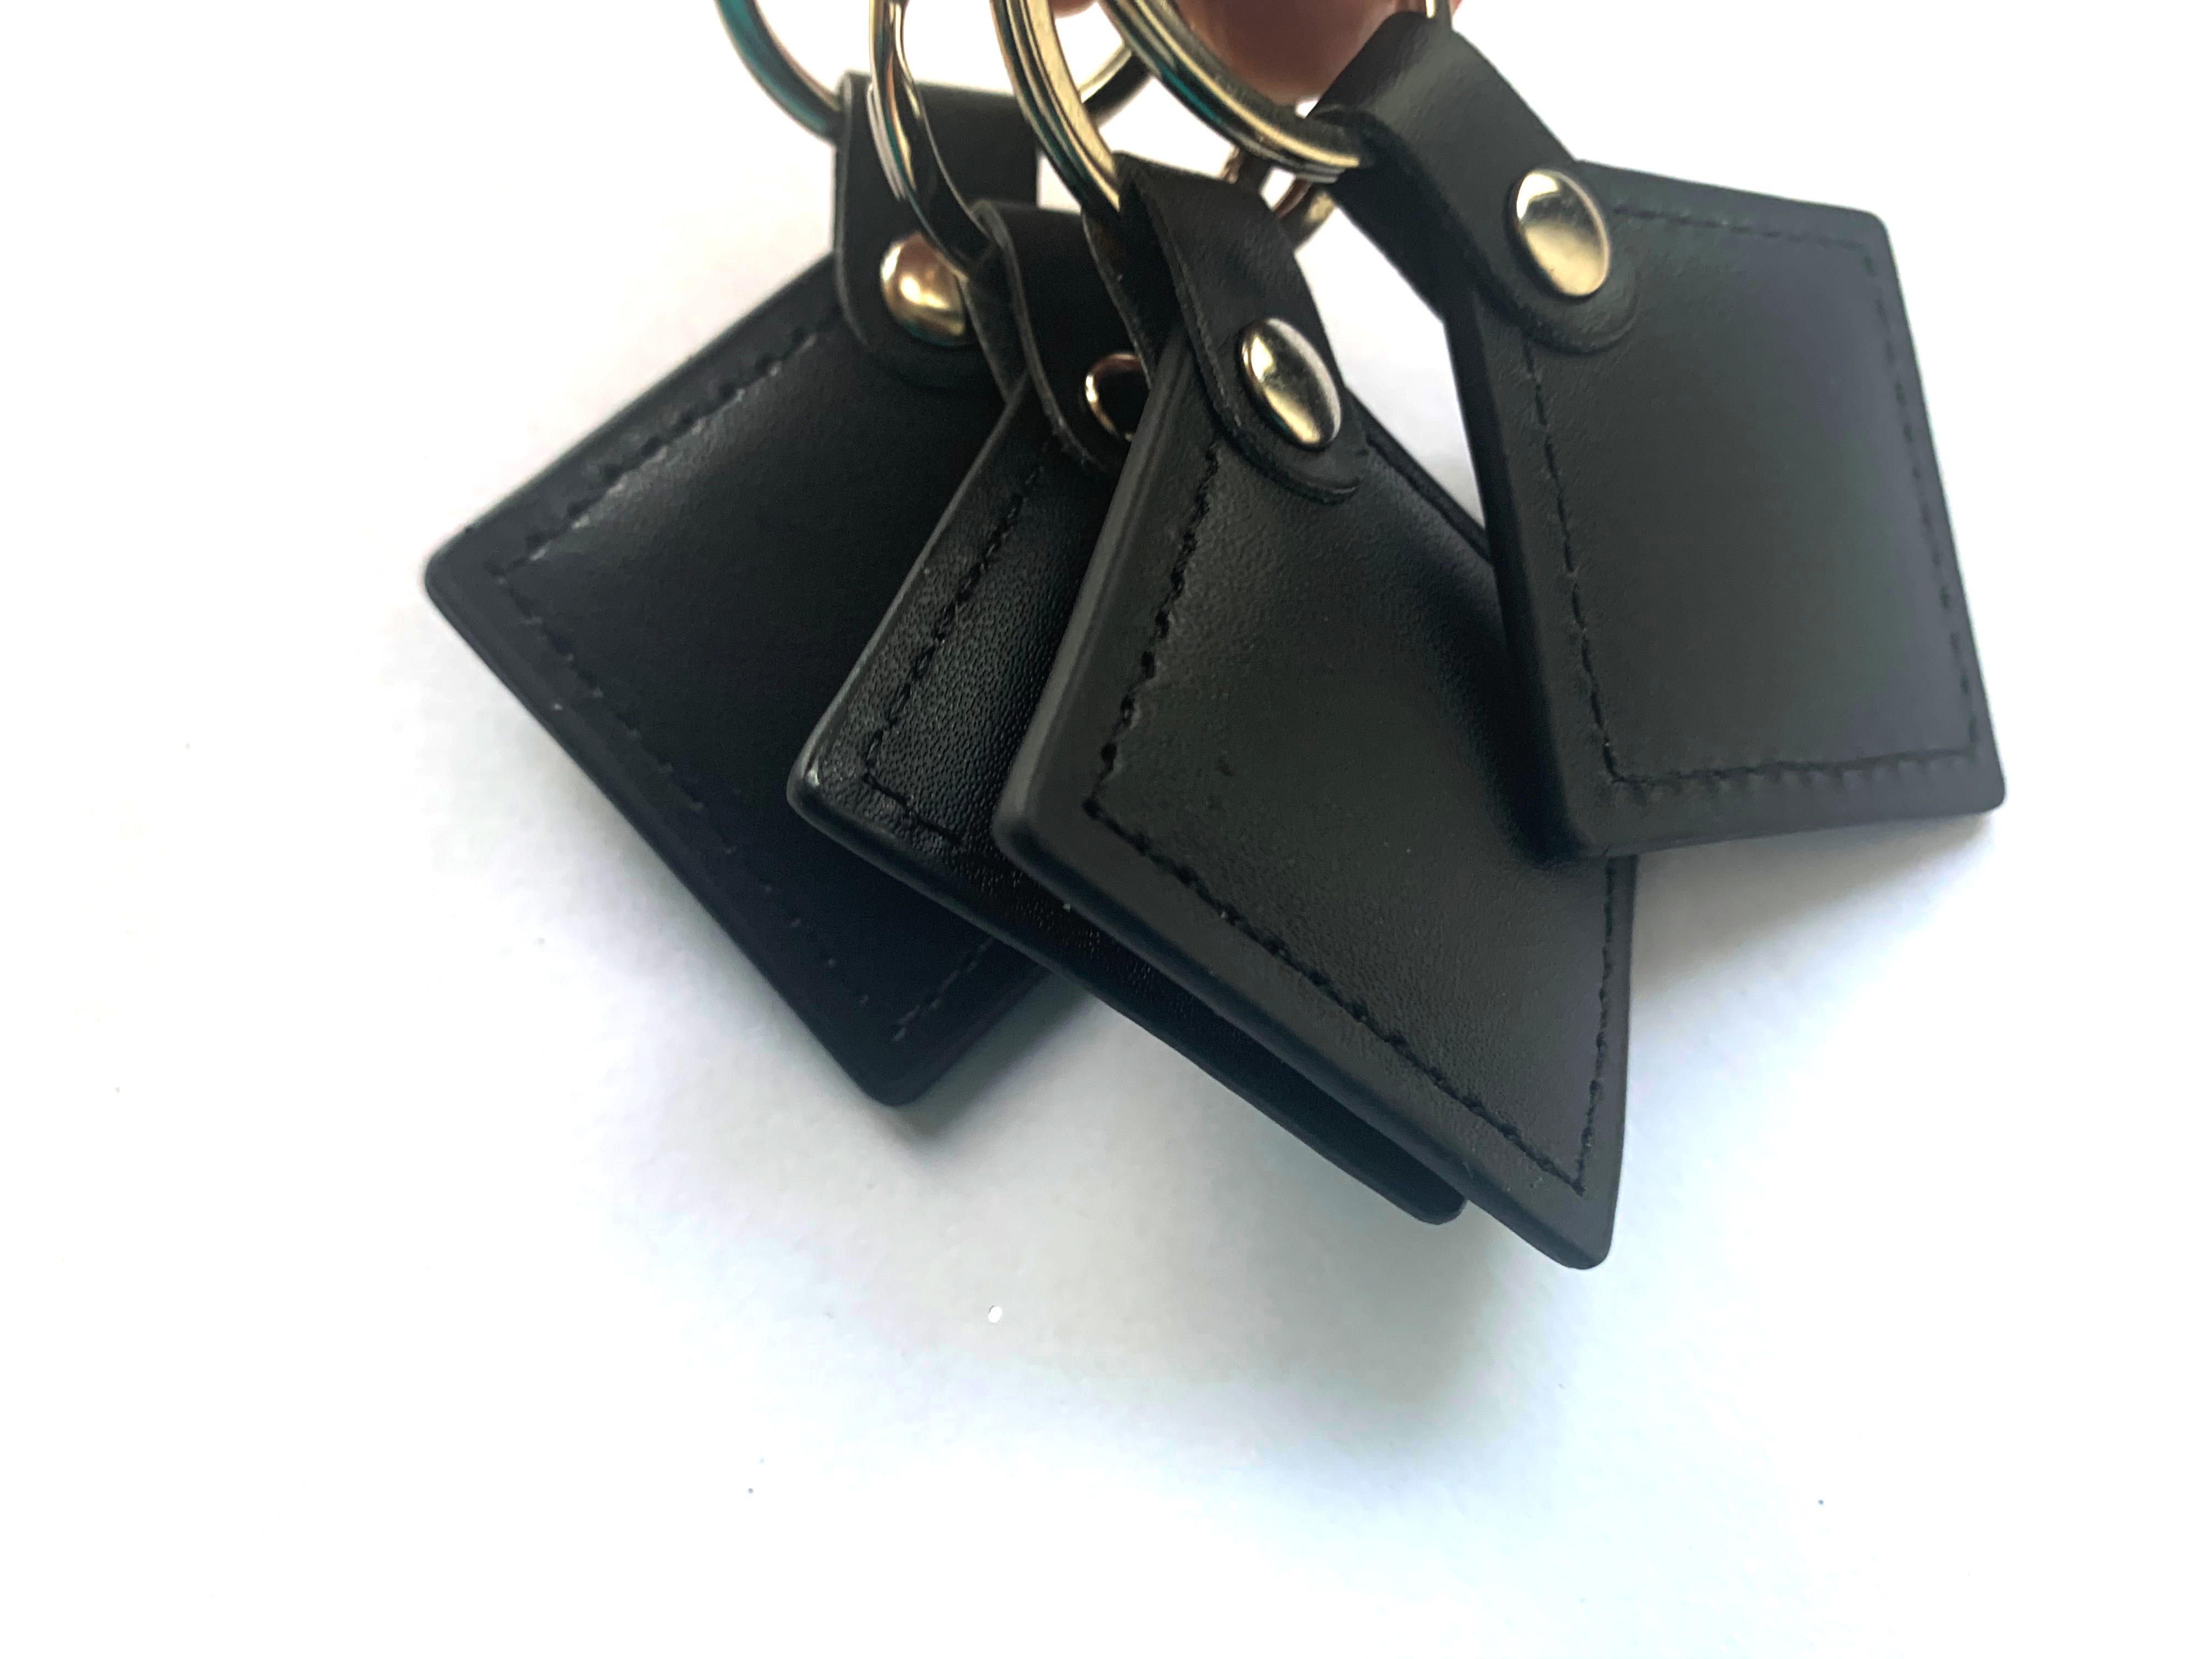 13.56Mhz Leather RFID Keyfob , Leather NFC Keychain Staff Card for Access Control